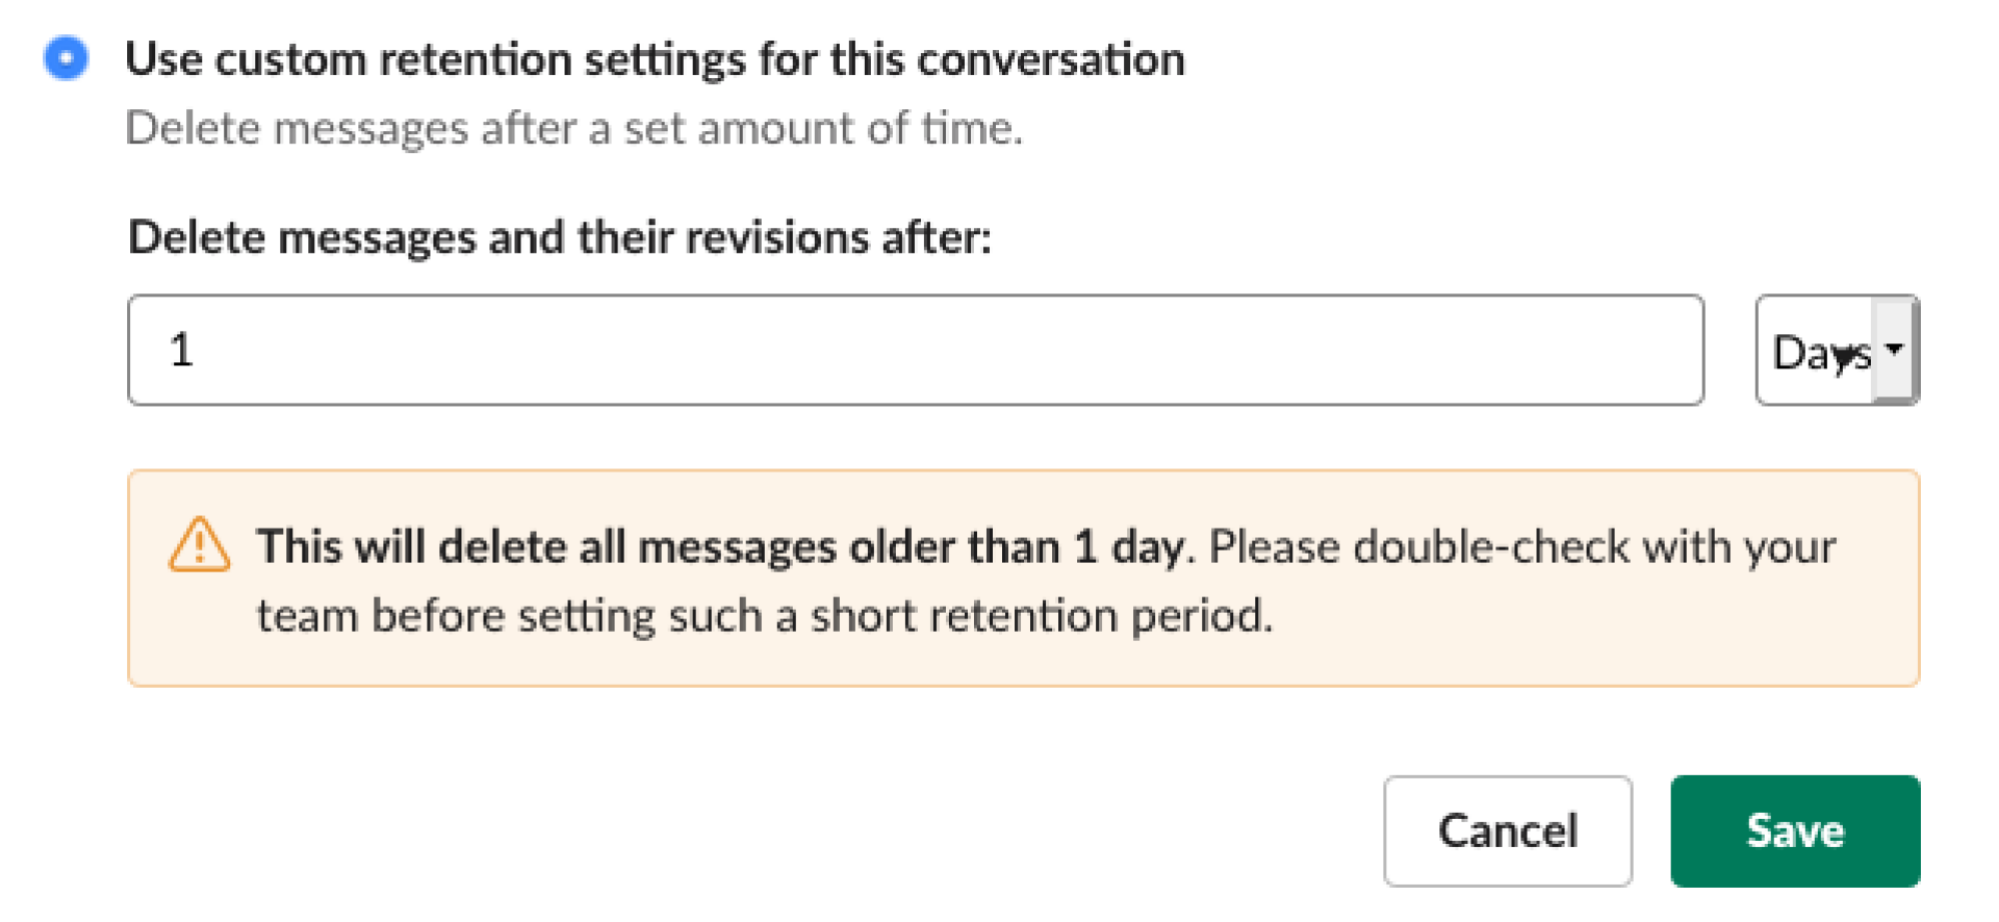 A screenshot of Slack's custom retention settings.